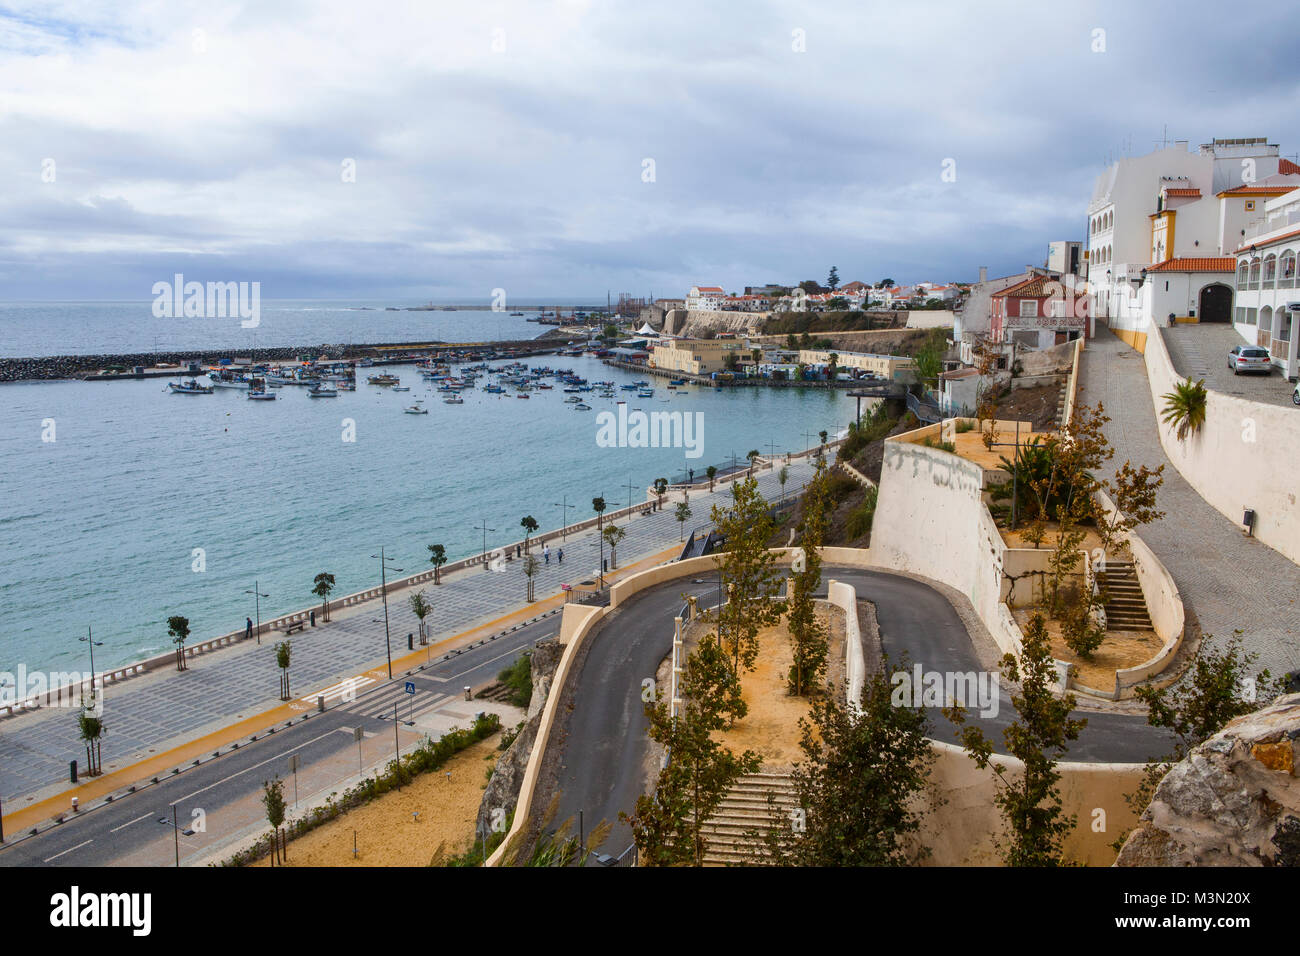 SINES, Portugal - 11 de octubre, 2015: Vista de la Praia de Vasco da Gama en Sines, Portugal. Foto de stock